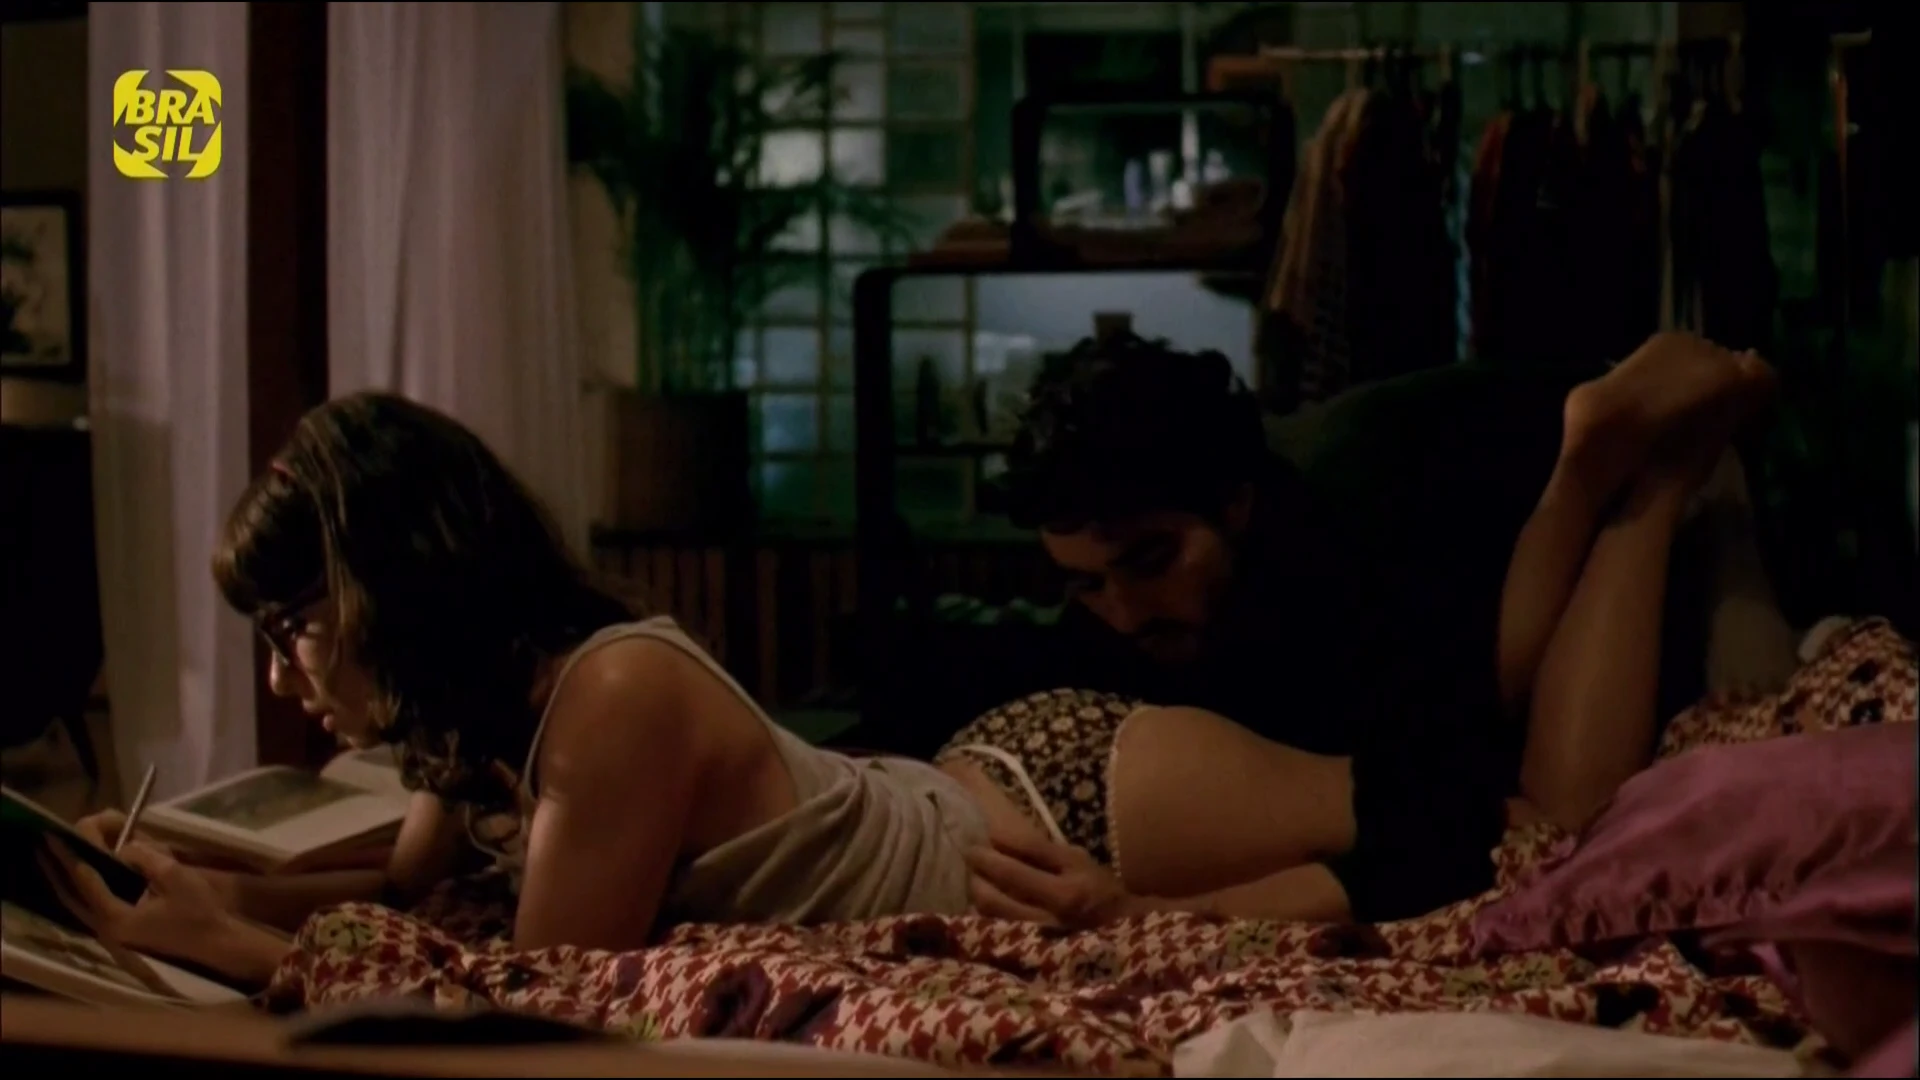 Maria Ribeiro showing her incredible nude brazilian body in a film